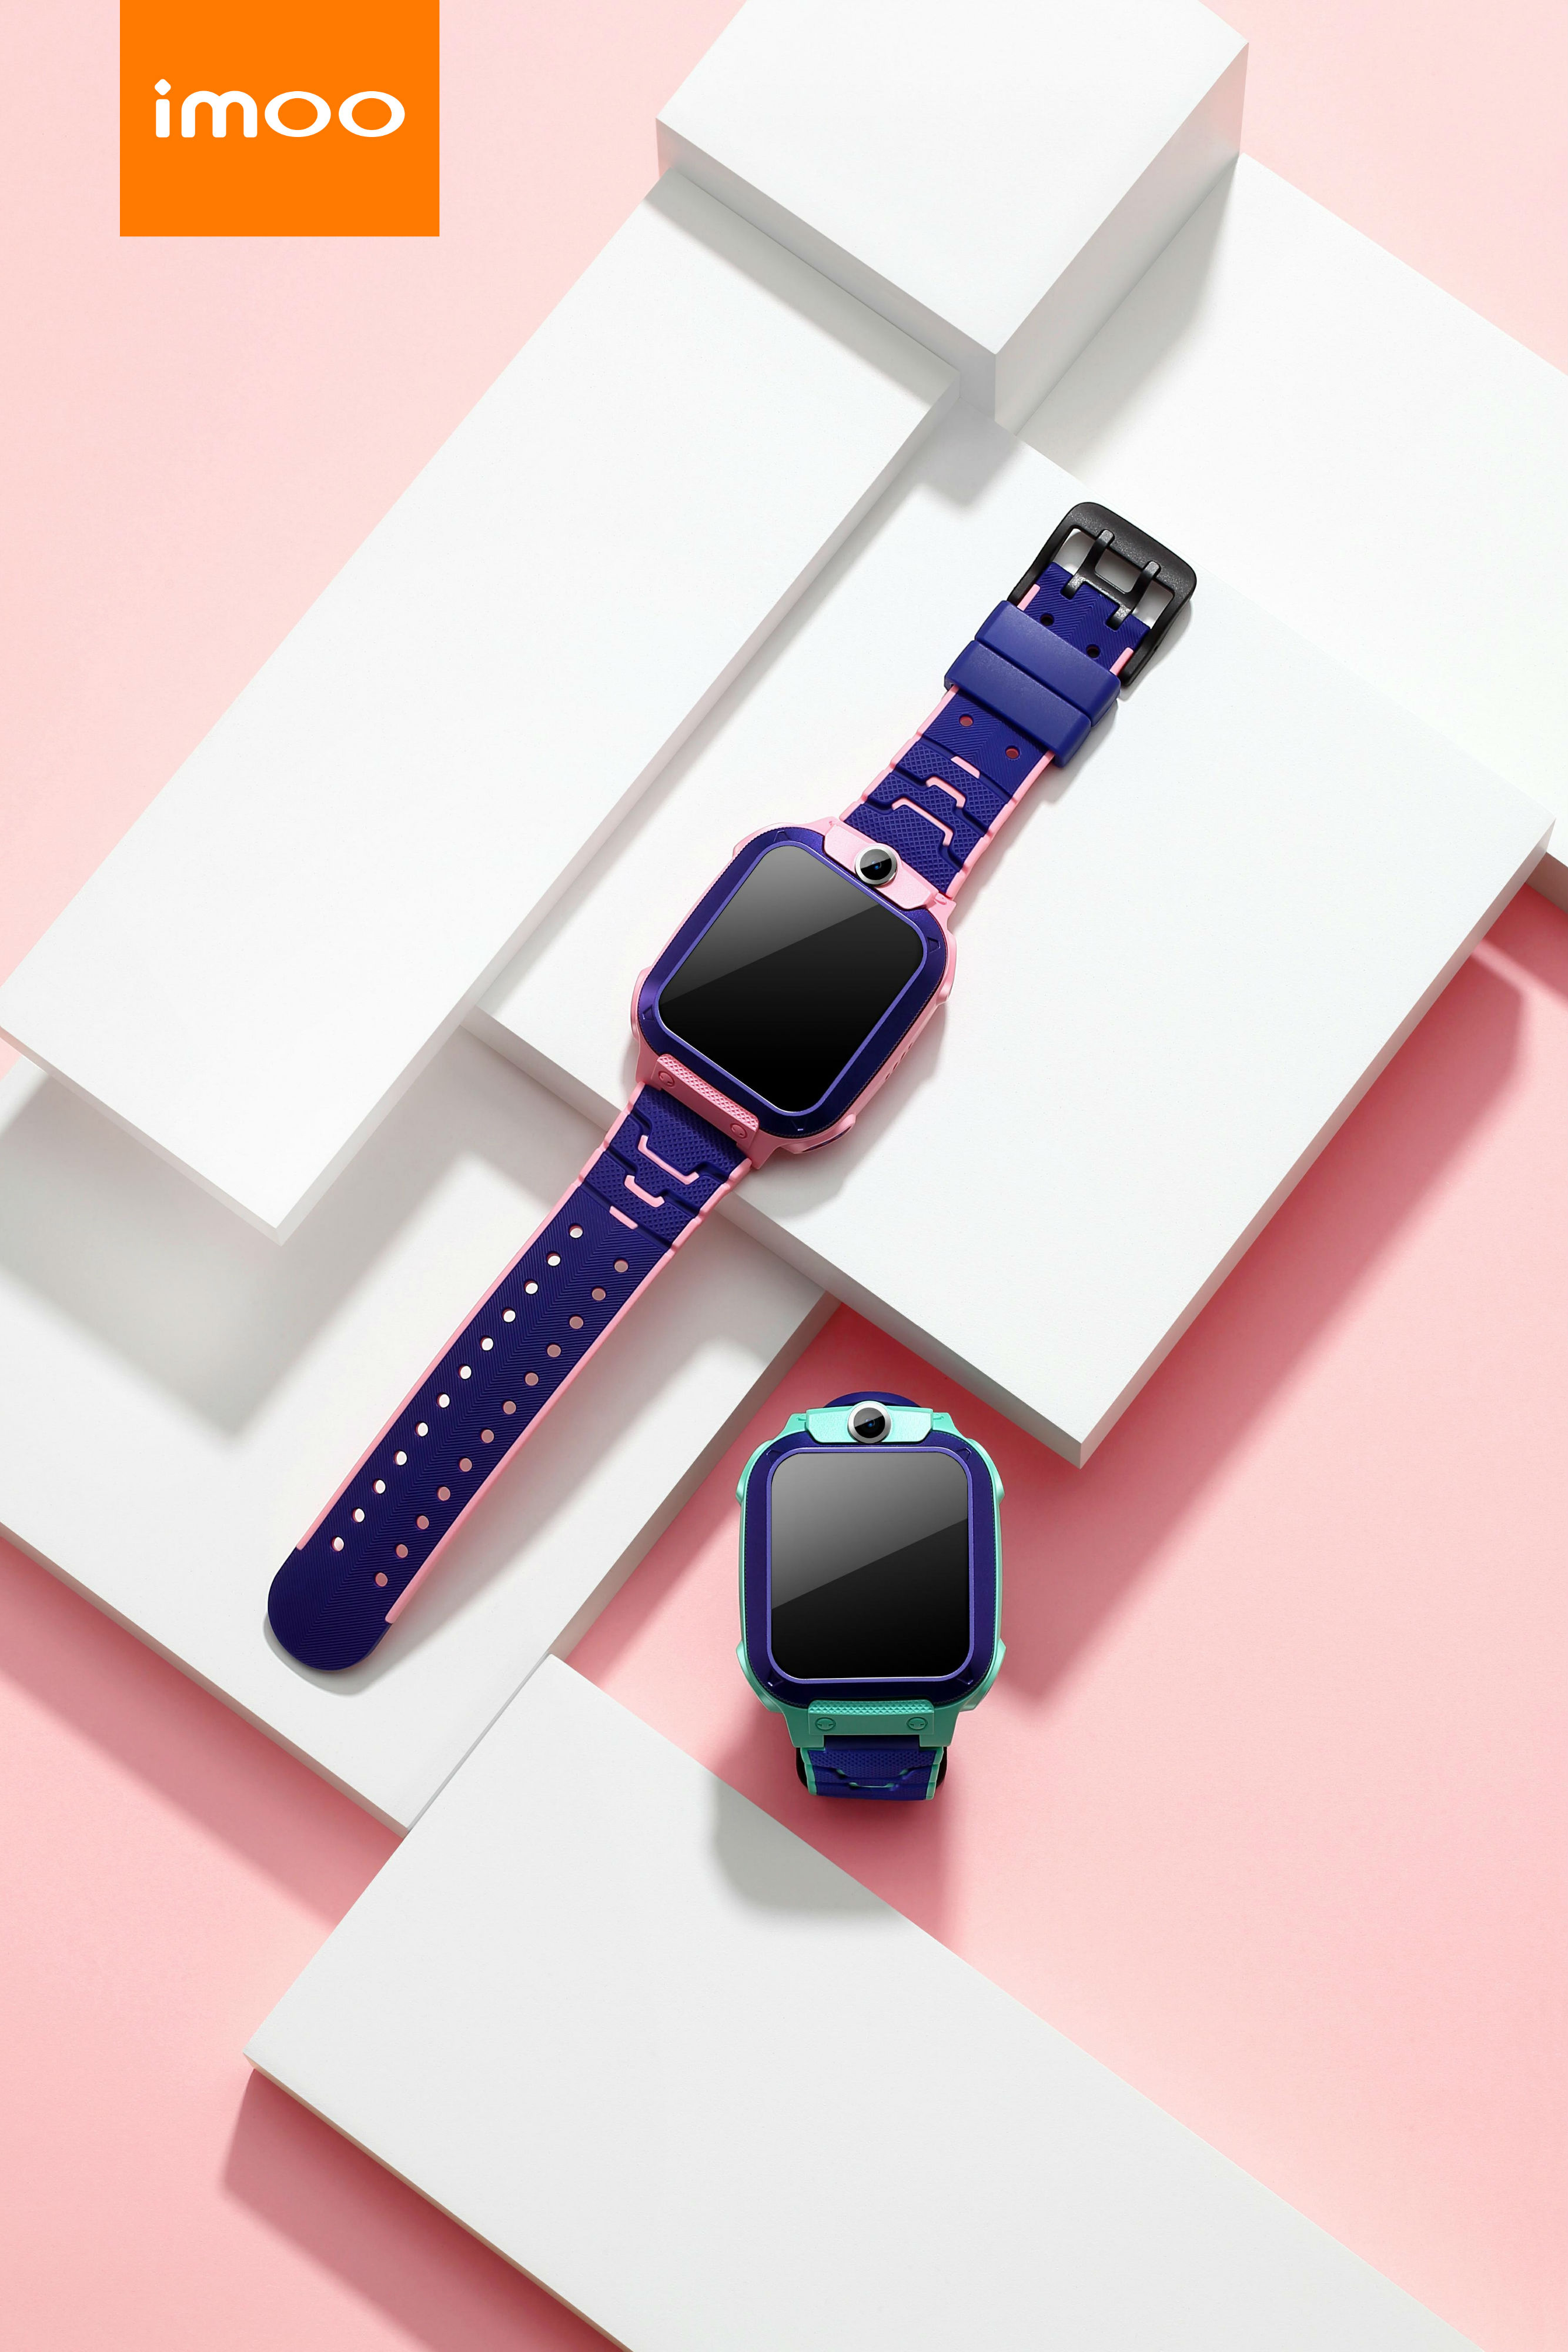 Imoo Siap Luncurkan Smartwatch Harga Terjangkau Dreamcoid